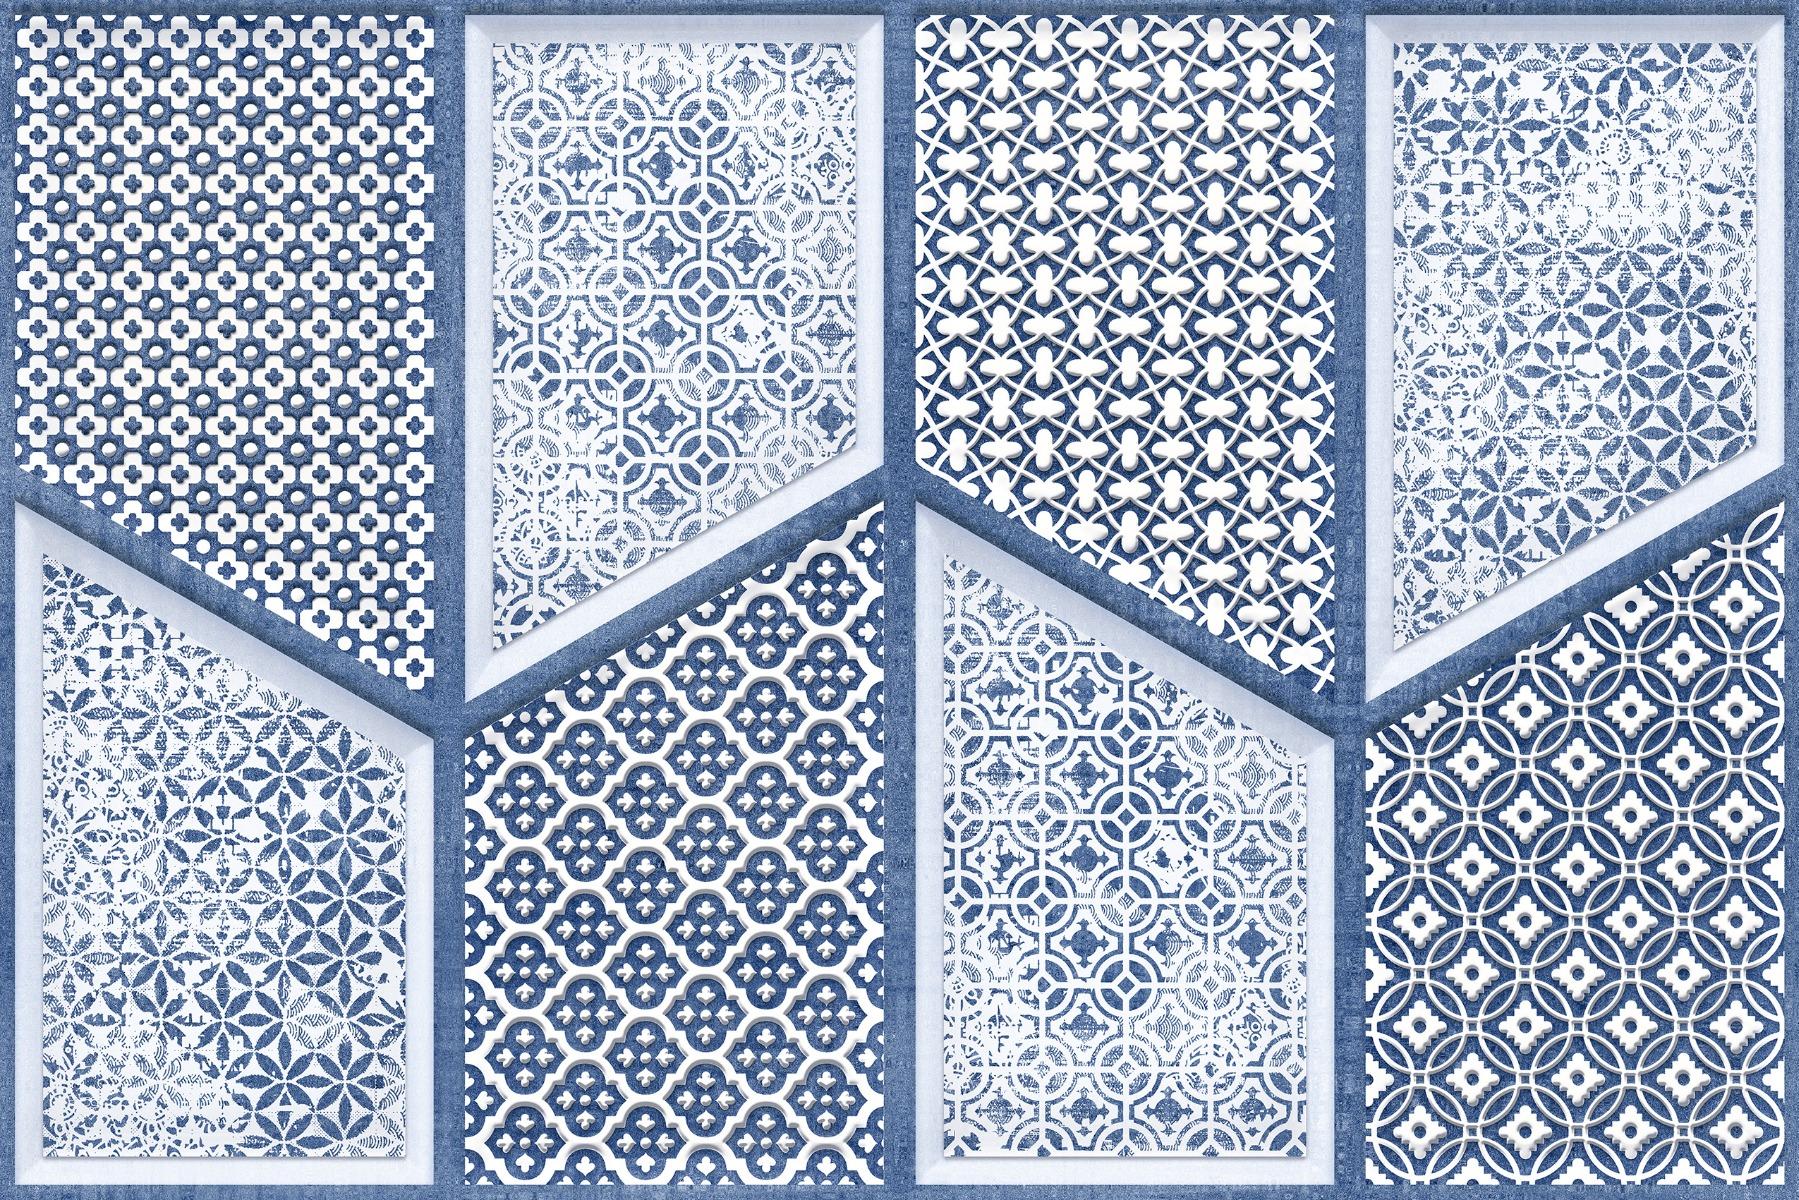 Blue Tiles for Bathroom Tiles, Kitchen Tiles, Accent Tiles, Dining Room Tiles